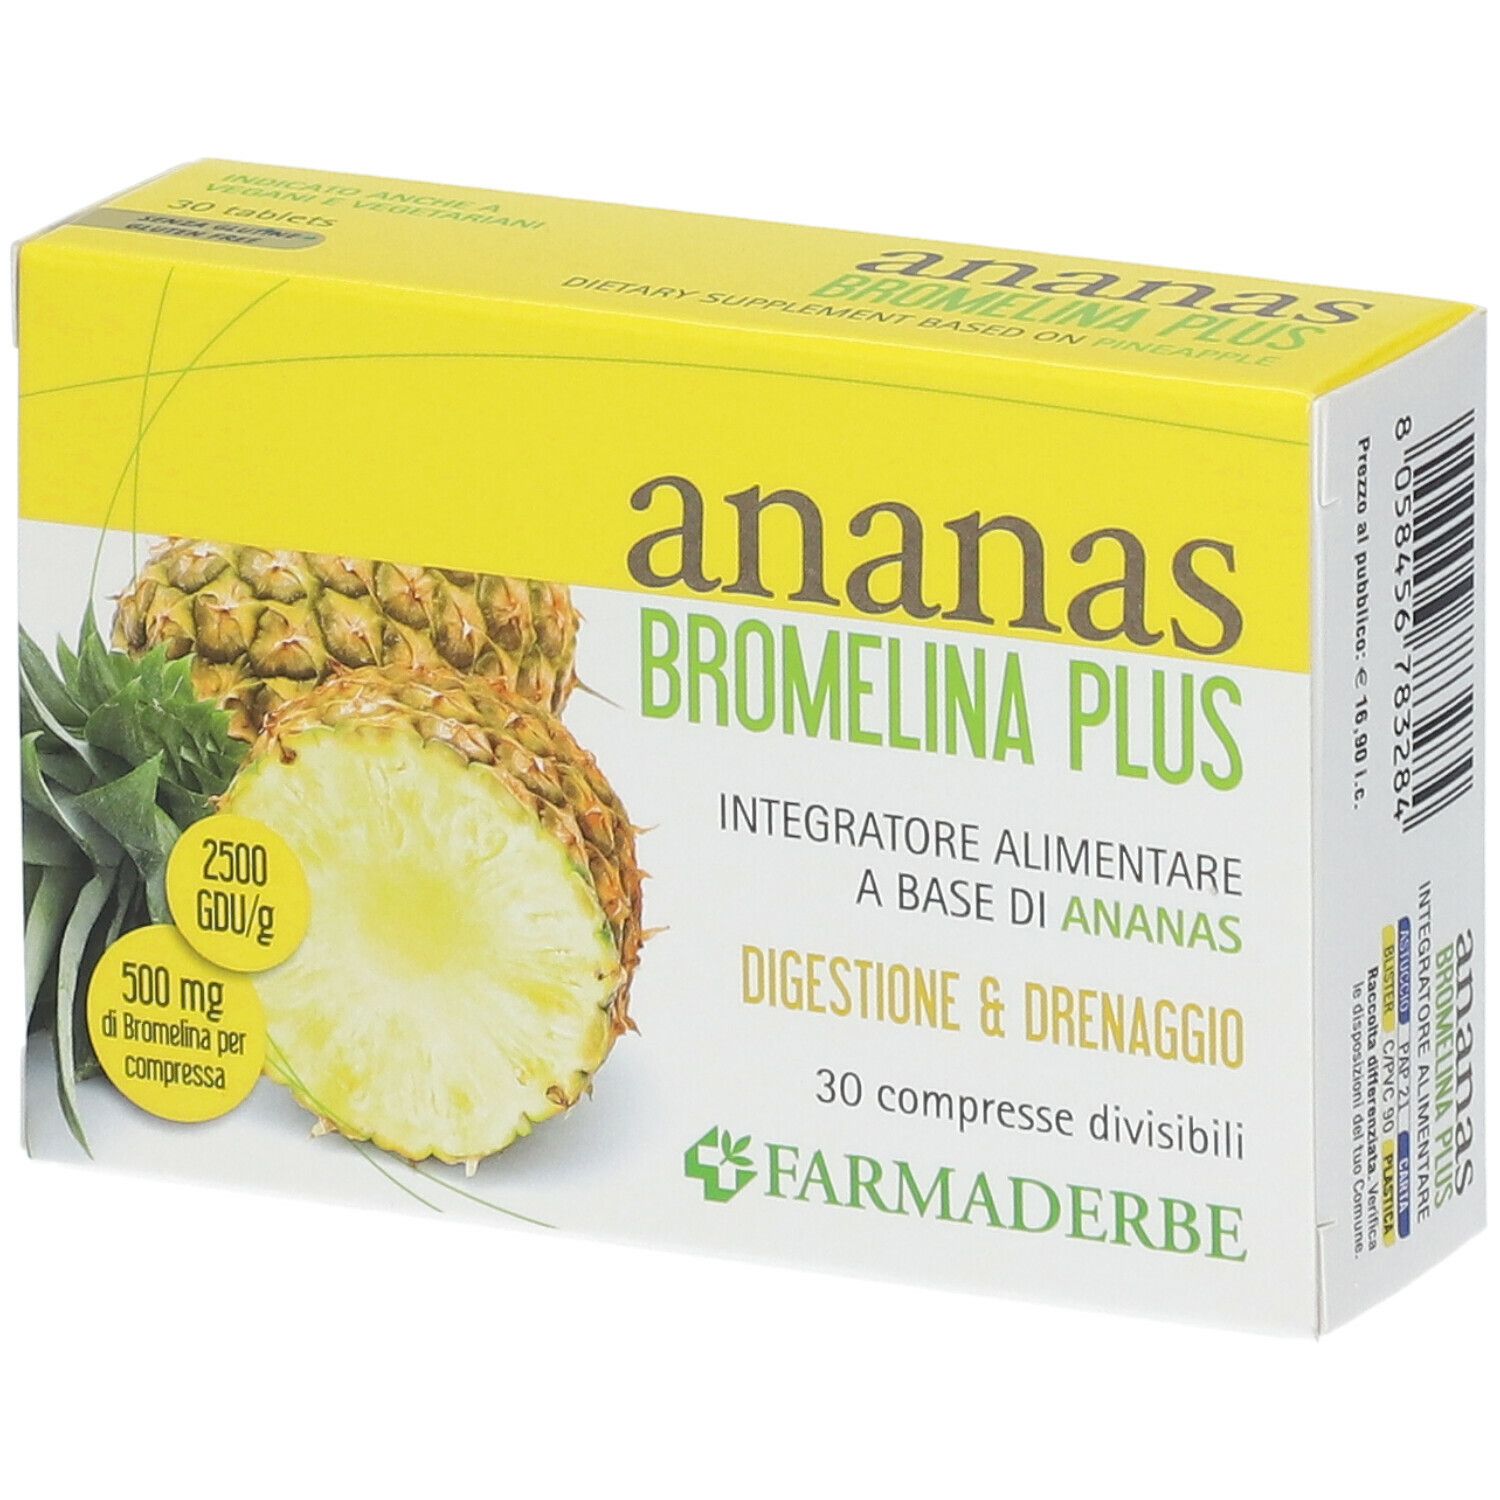 Image of FARMADERBE Ananas Bromelin Plus